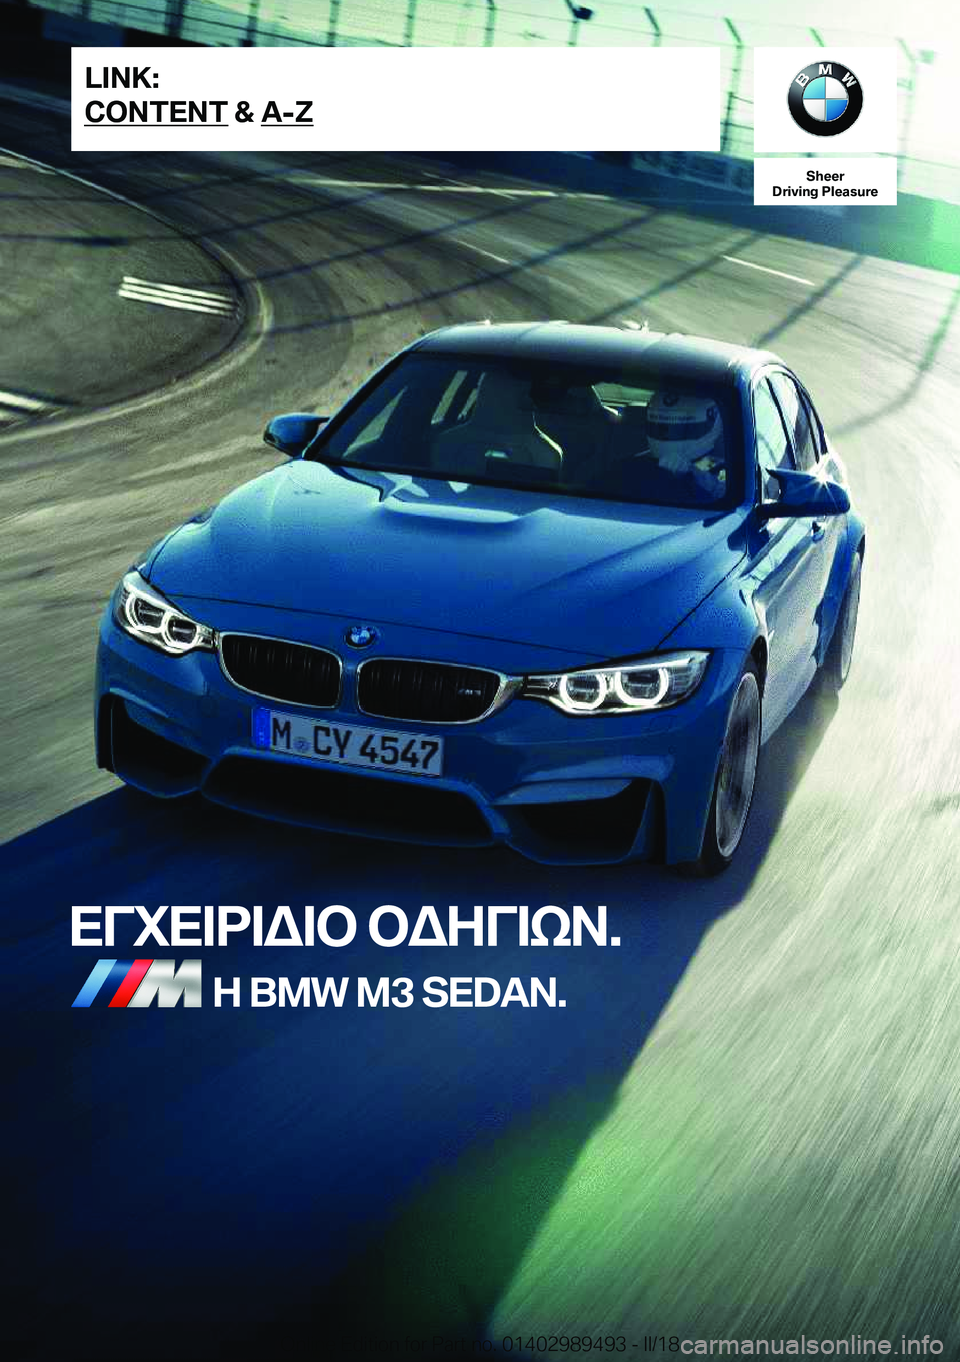 BMW M3 2018  ΟΔΗΓΌΣ ΧΡΉΣΗΣ (in Greek) �S�h�e�e�r
�D�r�i�v�i�n�g��P�l�e�a�s�u�r�e
XViX=d=W=b�bWZV=kA�.Z��B�M�W��M�3��S�E�D�A�N�.�L�I�N�K�:
�C�O�N�T�E�N�T��&��A�-�Z�O�n�l�i�n�e� �E�d�i�t�i�o�n� �f�o�r� �P�a�r�t� �n�